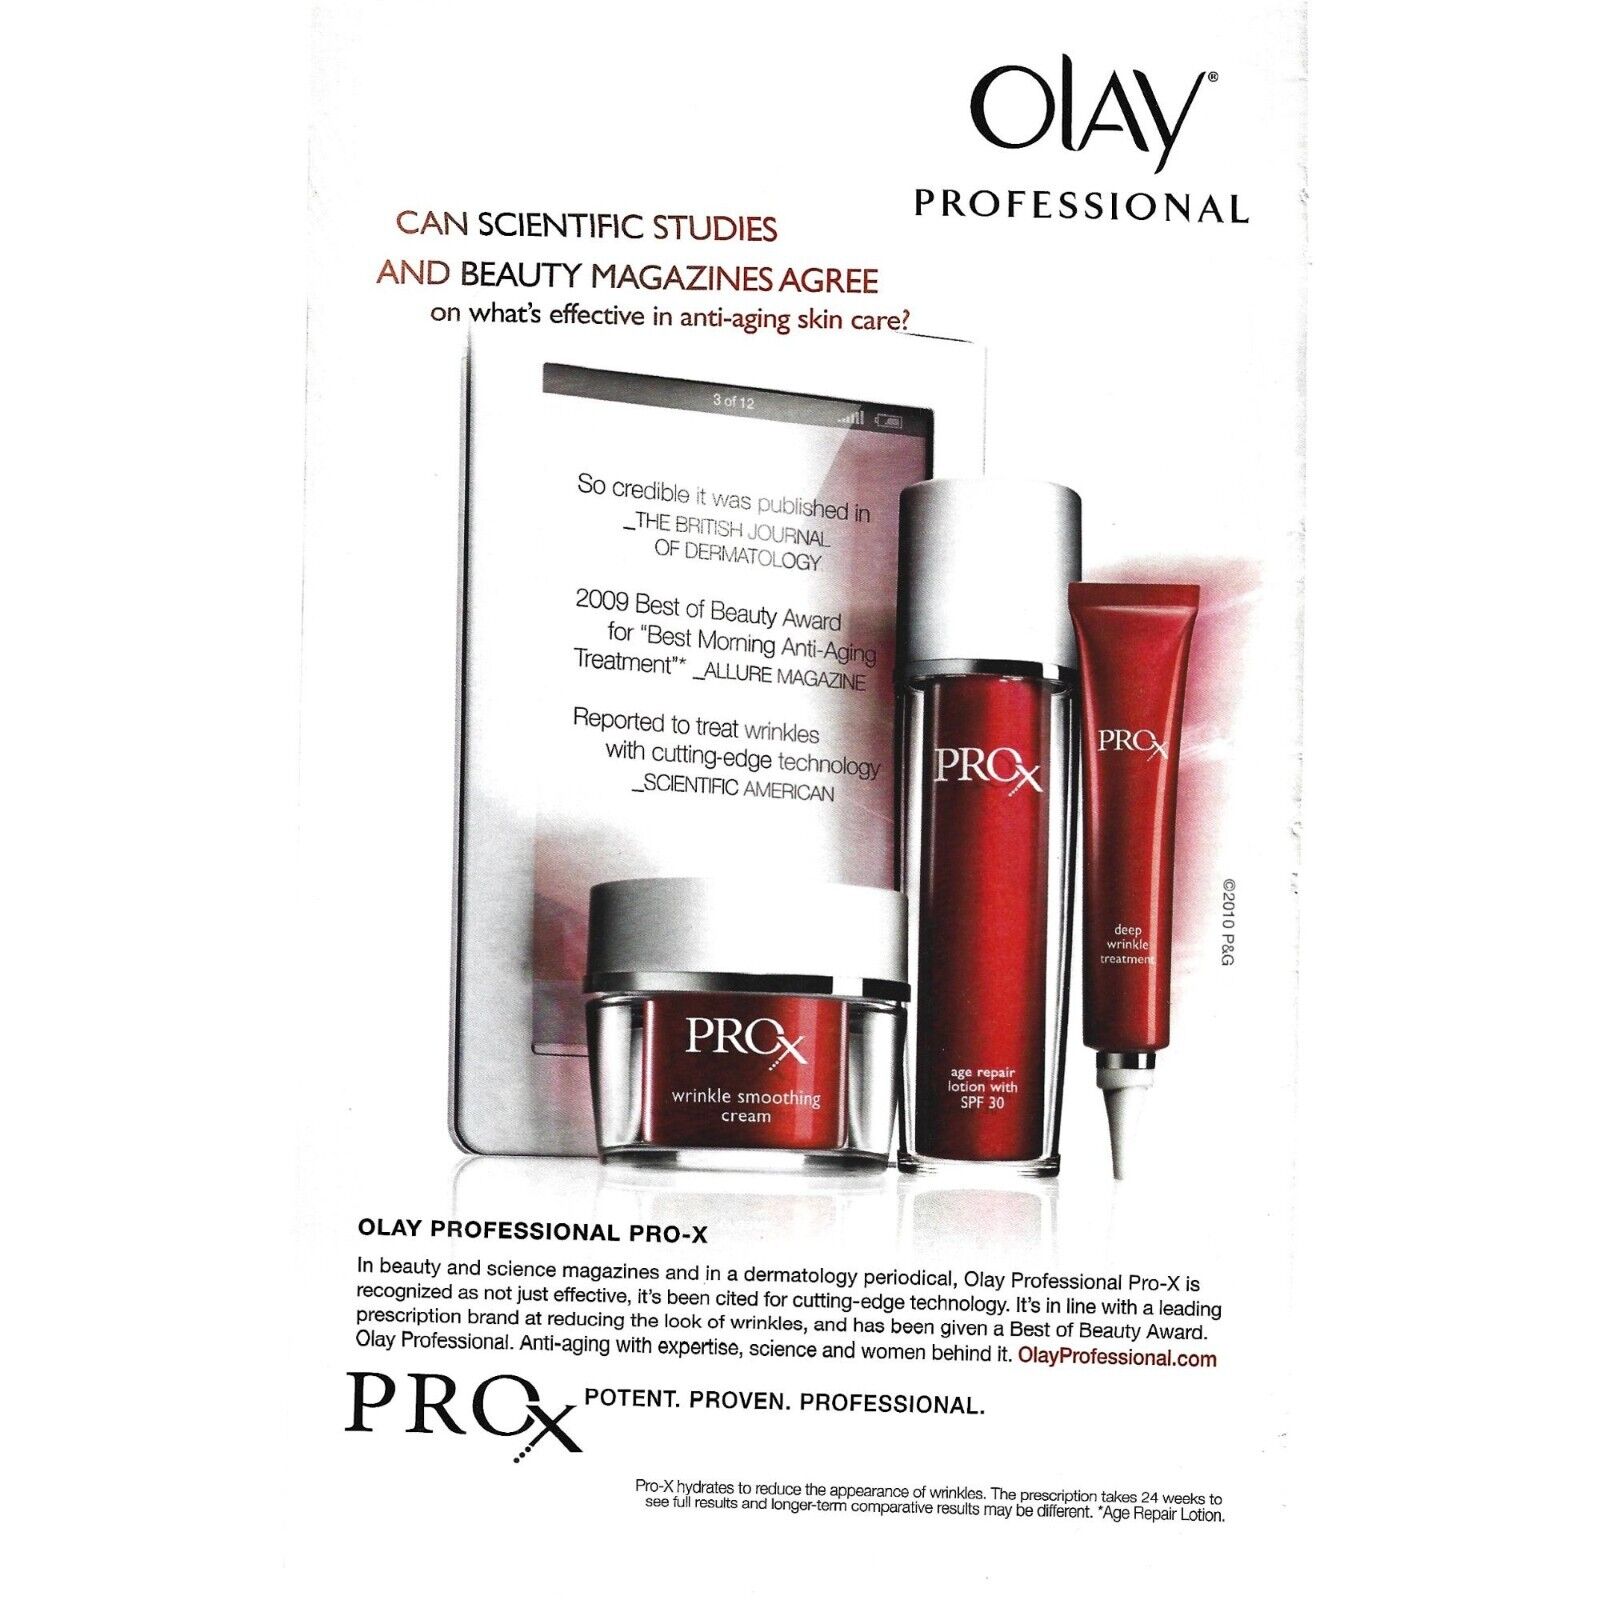 Olay Professional ProX Beauty ADVERT Scientific 2000s Print Ad